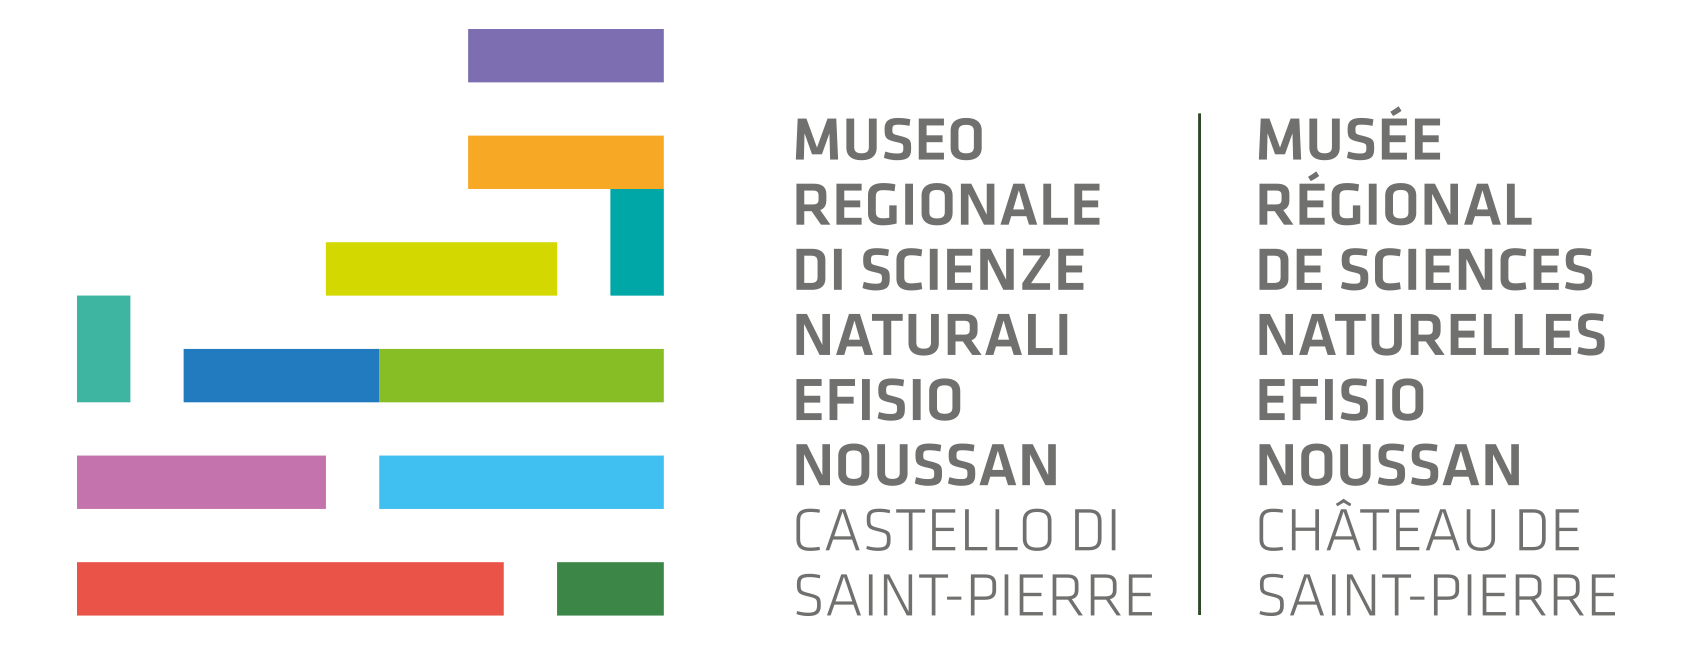 Museo Regionale di Scienze Naturali Efisio Noussan